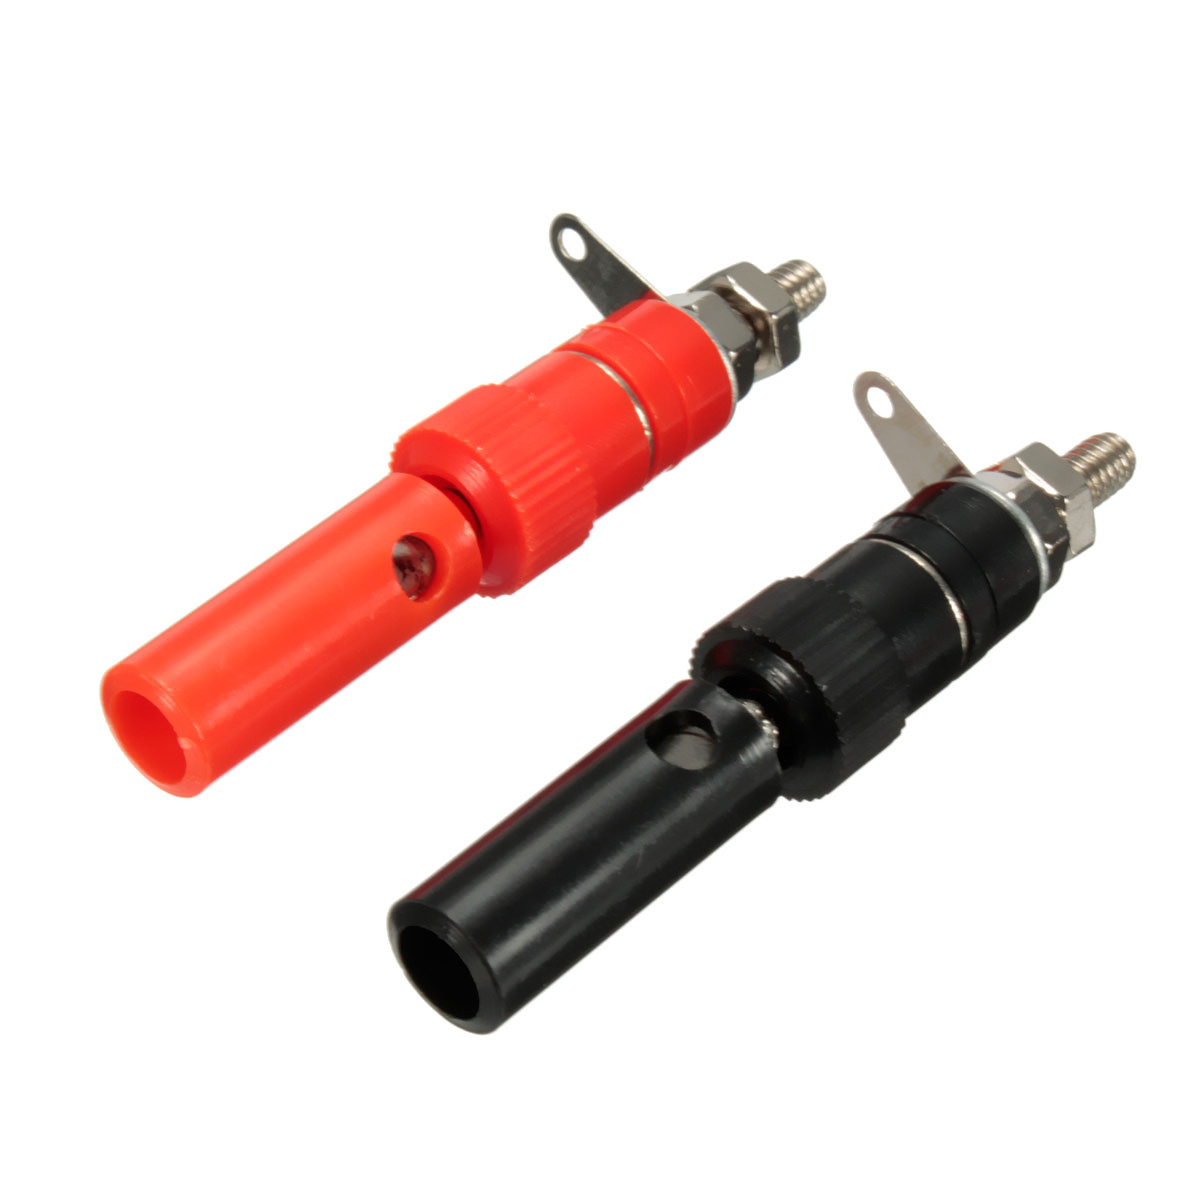 DANIU-30-Pairs-4mm-Terminal-Banana-Plug-Socket-Jack-Connectors-Instrument-Light-Tools-Black-and-Red-1358117-8